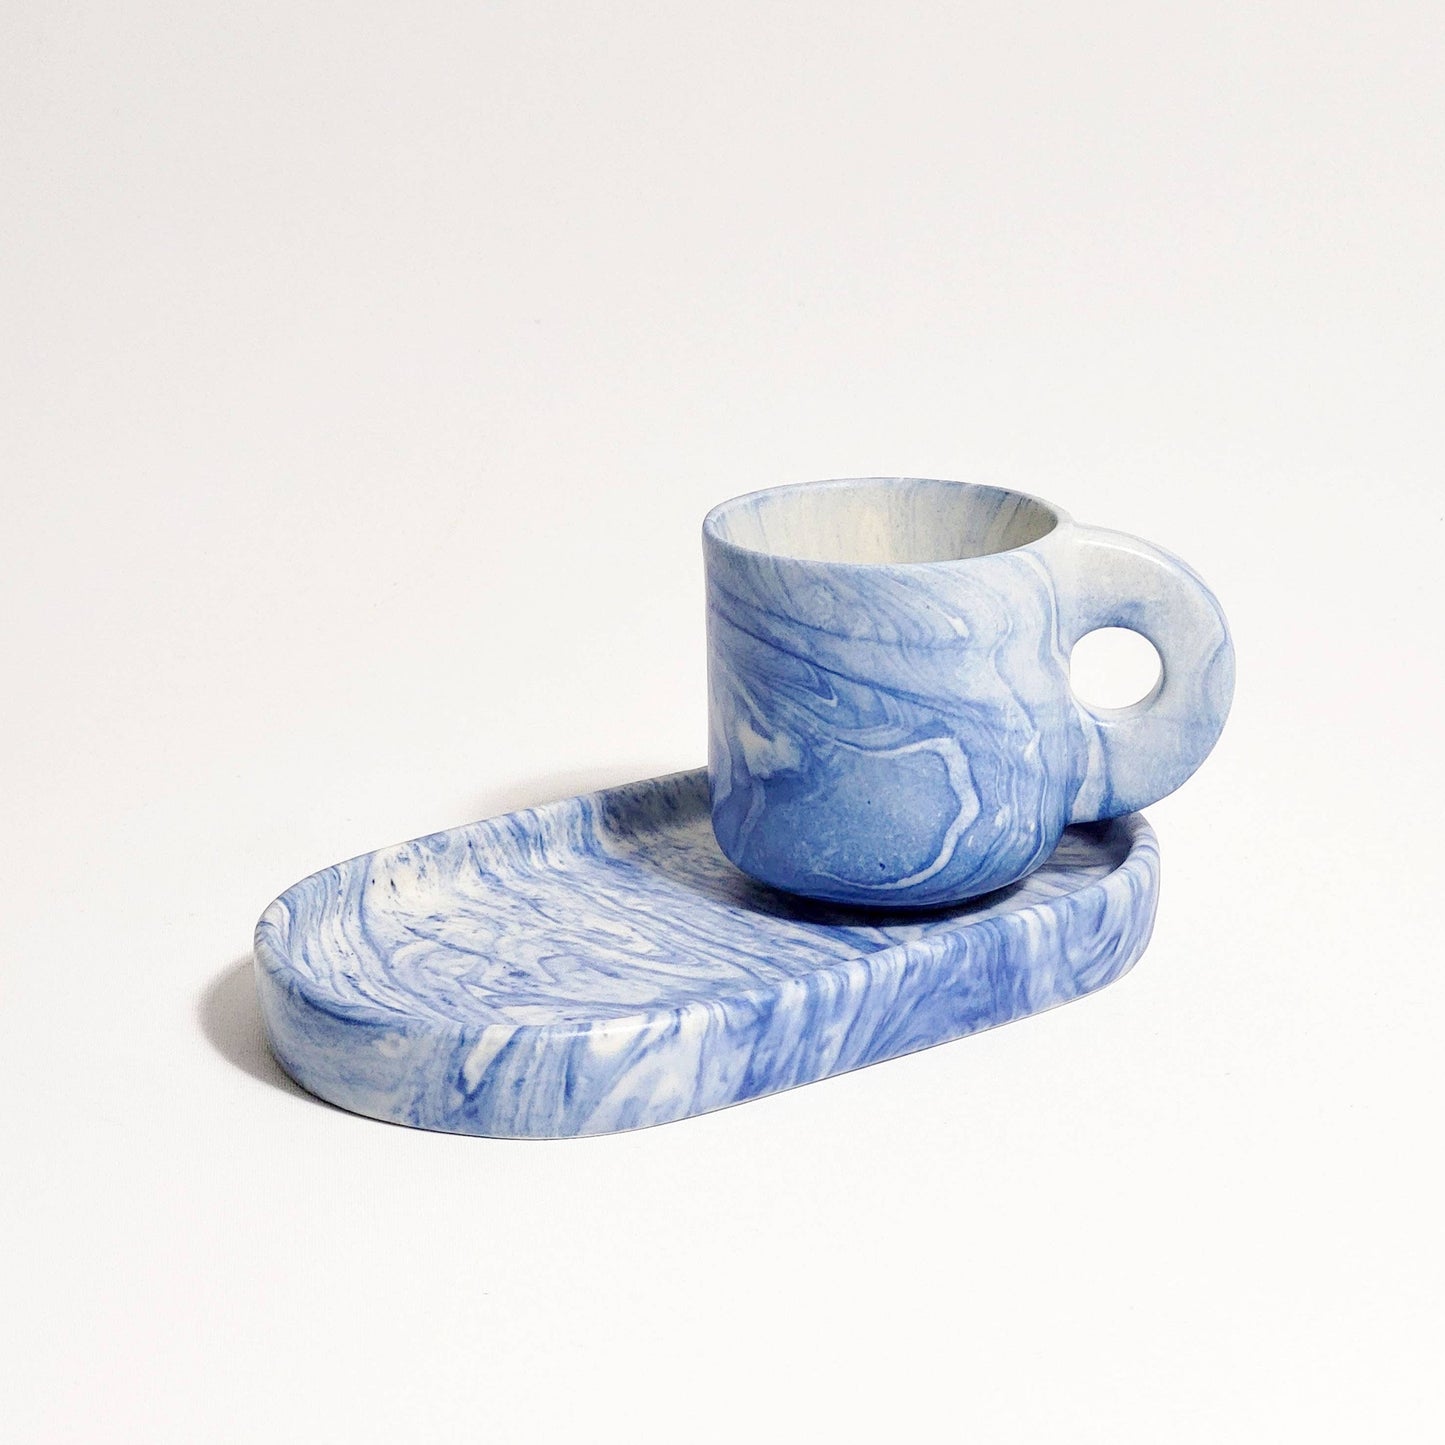 Pó de Barro TV SET Blue Marble - Double espresso Mug + Tray